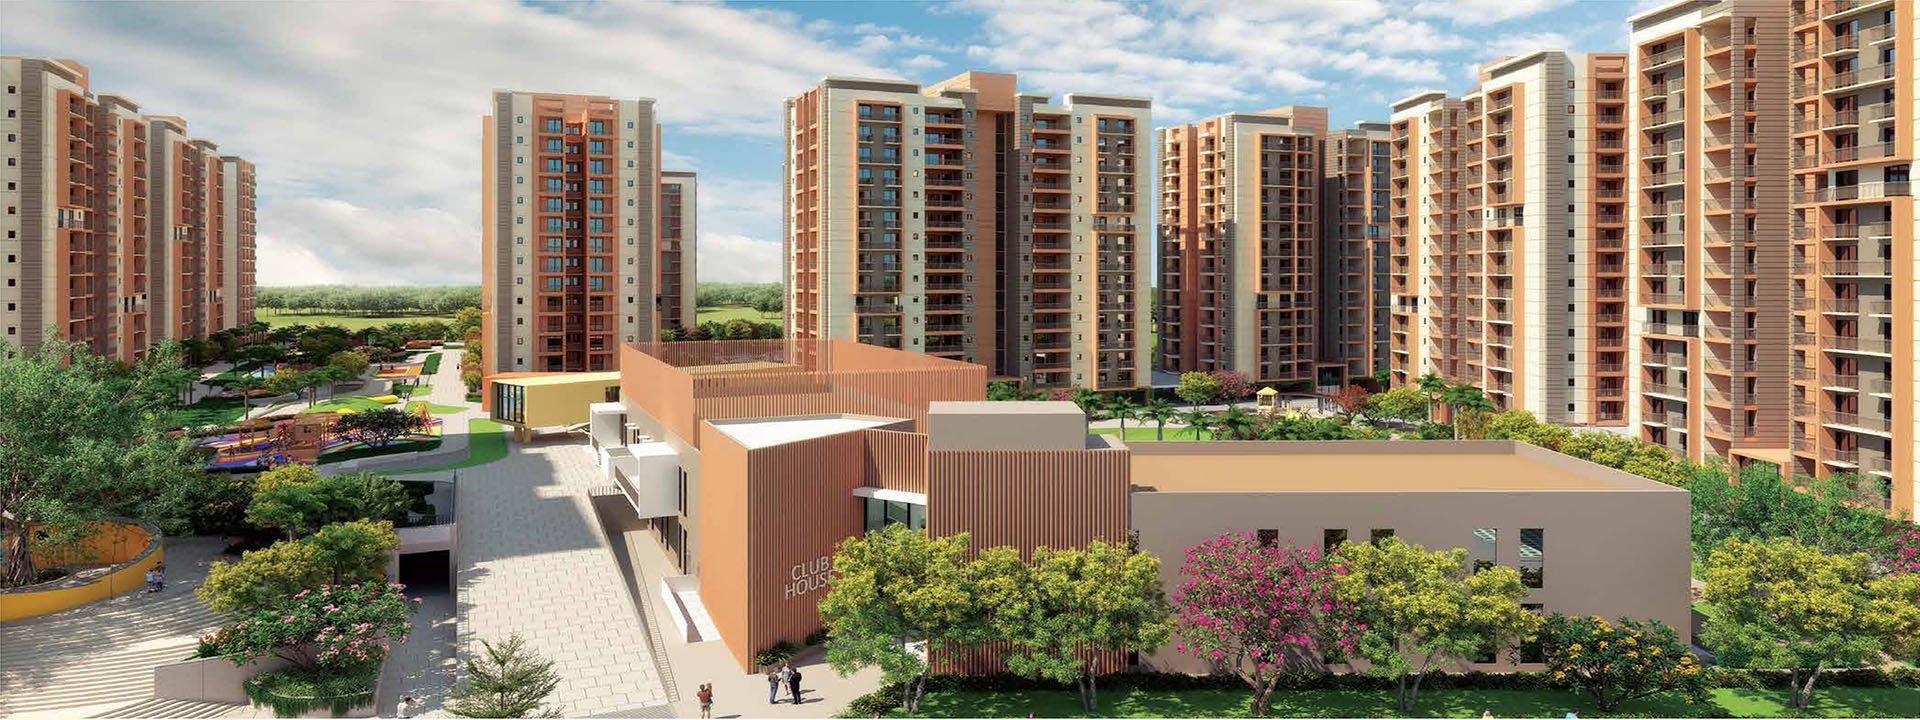 ashiana-amarah-luxurious-3-4-BHK-apartments-in-gurgaon-img1012s